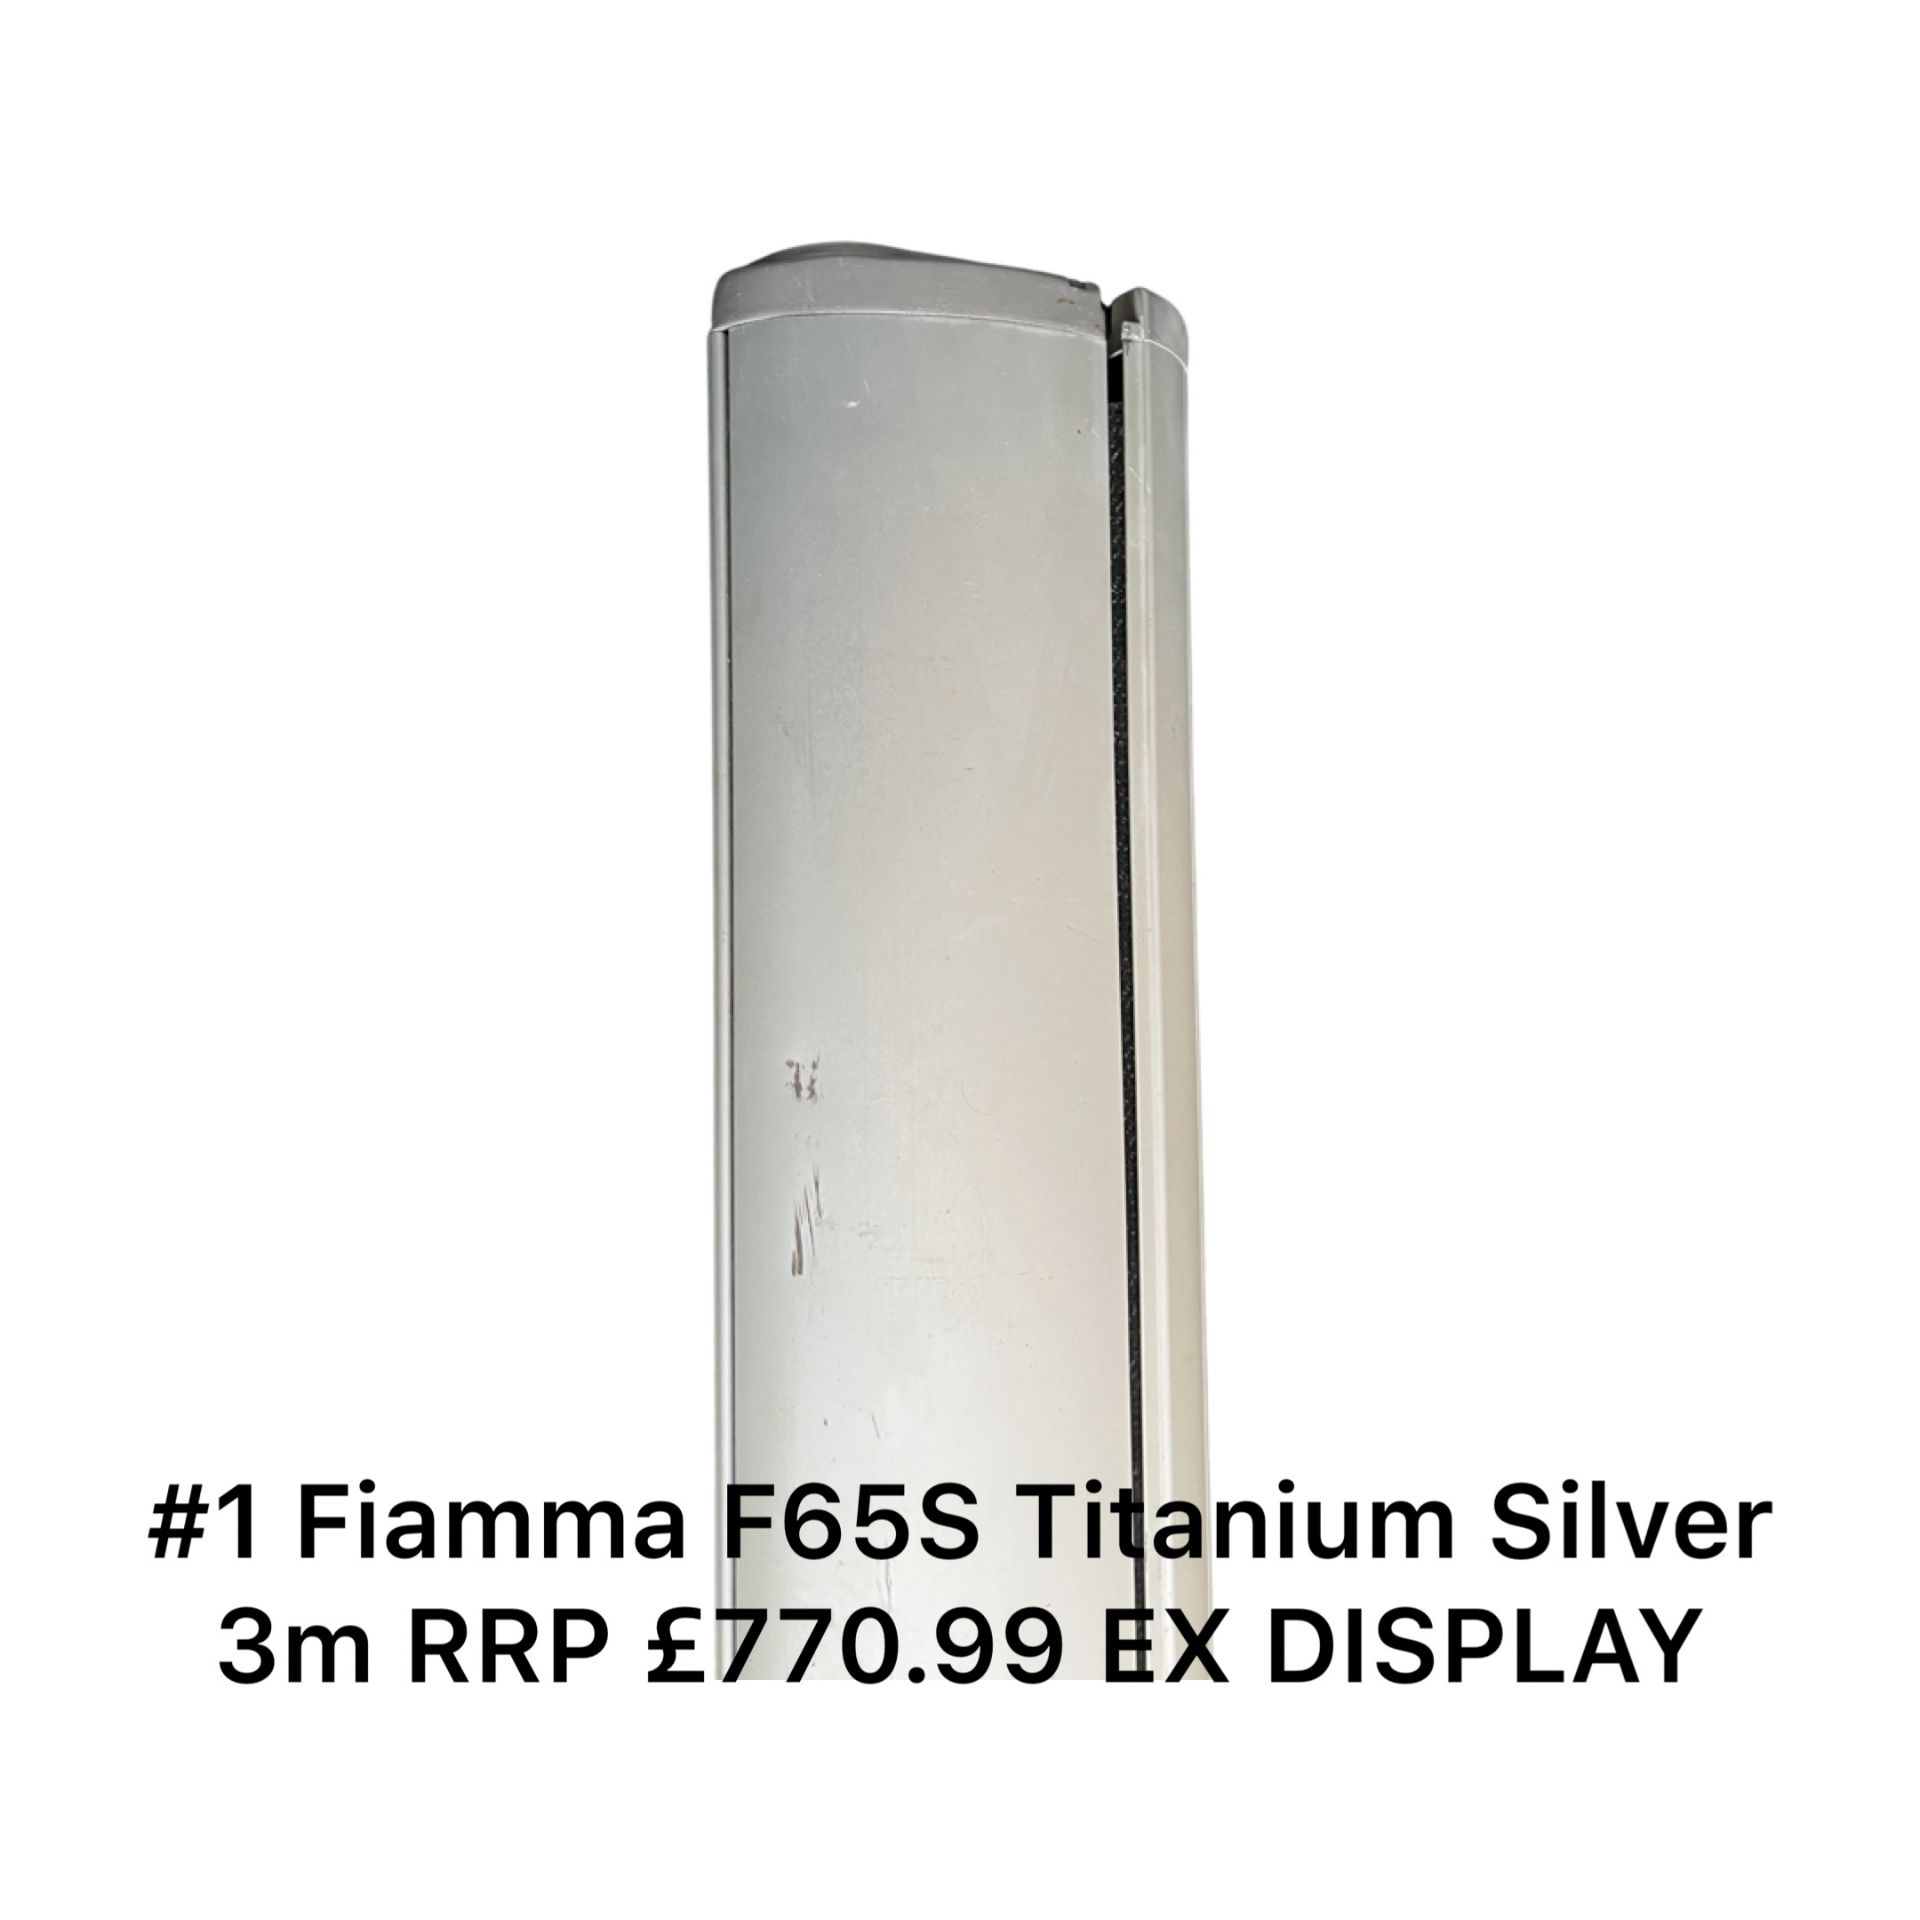 Fiamma F65S Titanium Silver 3m RRP £770.99 ex display *NO VAT*